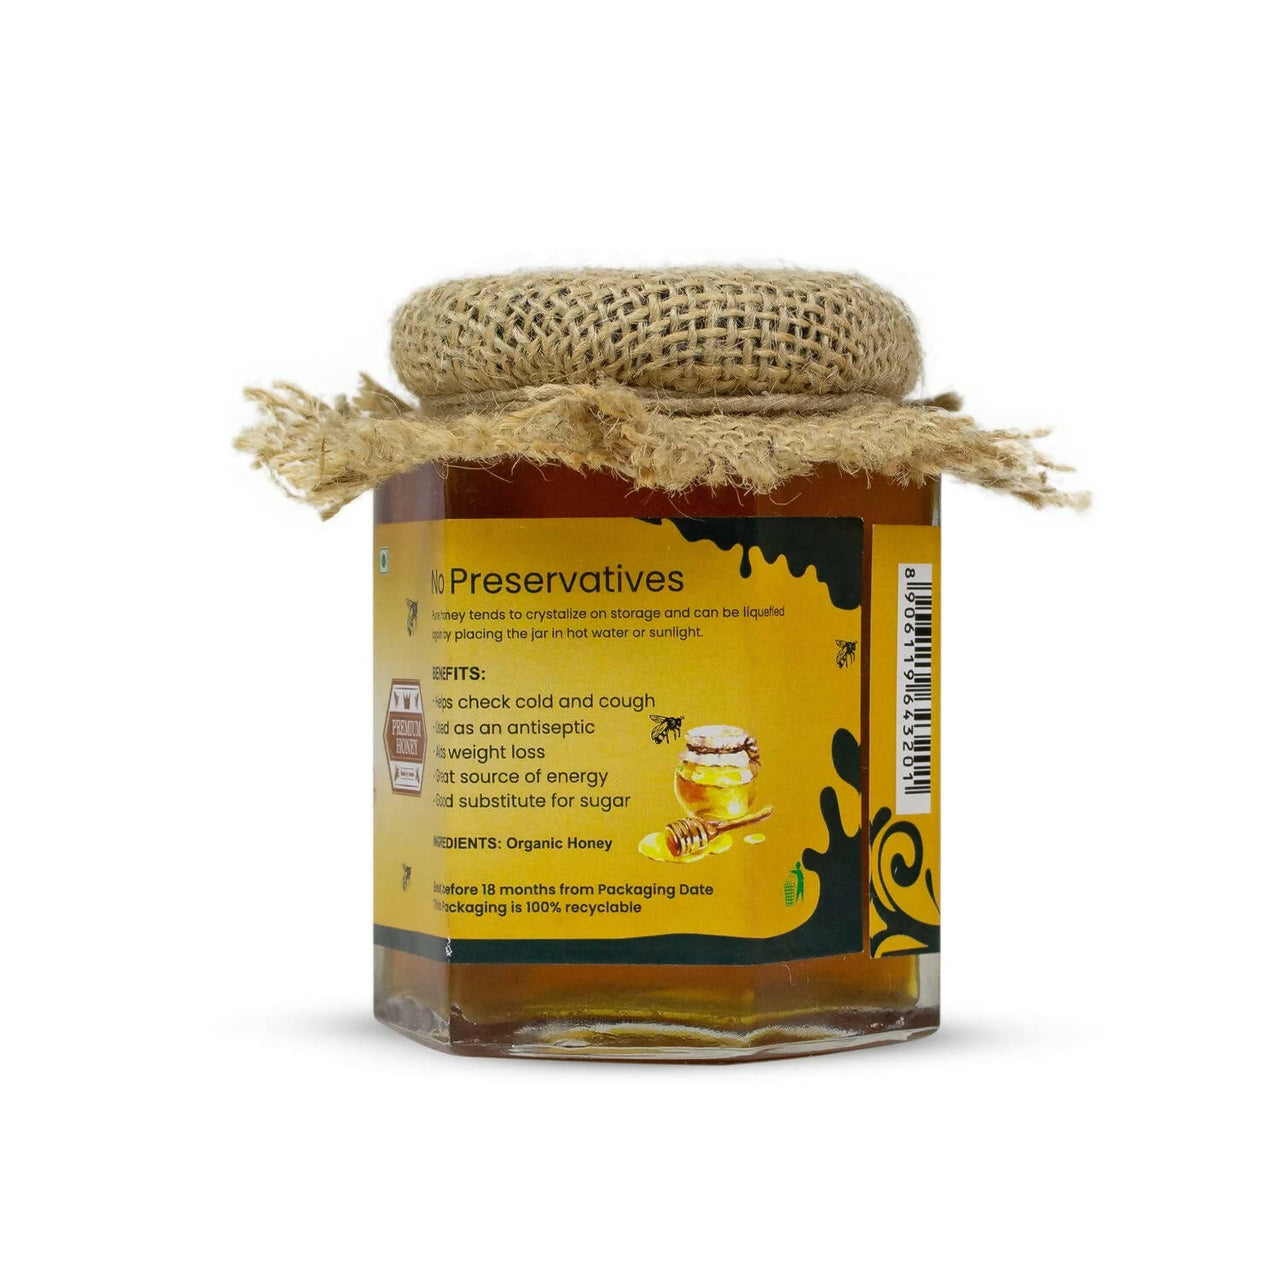 Upaveda Certified Organic Raw Honey - Distacart